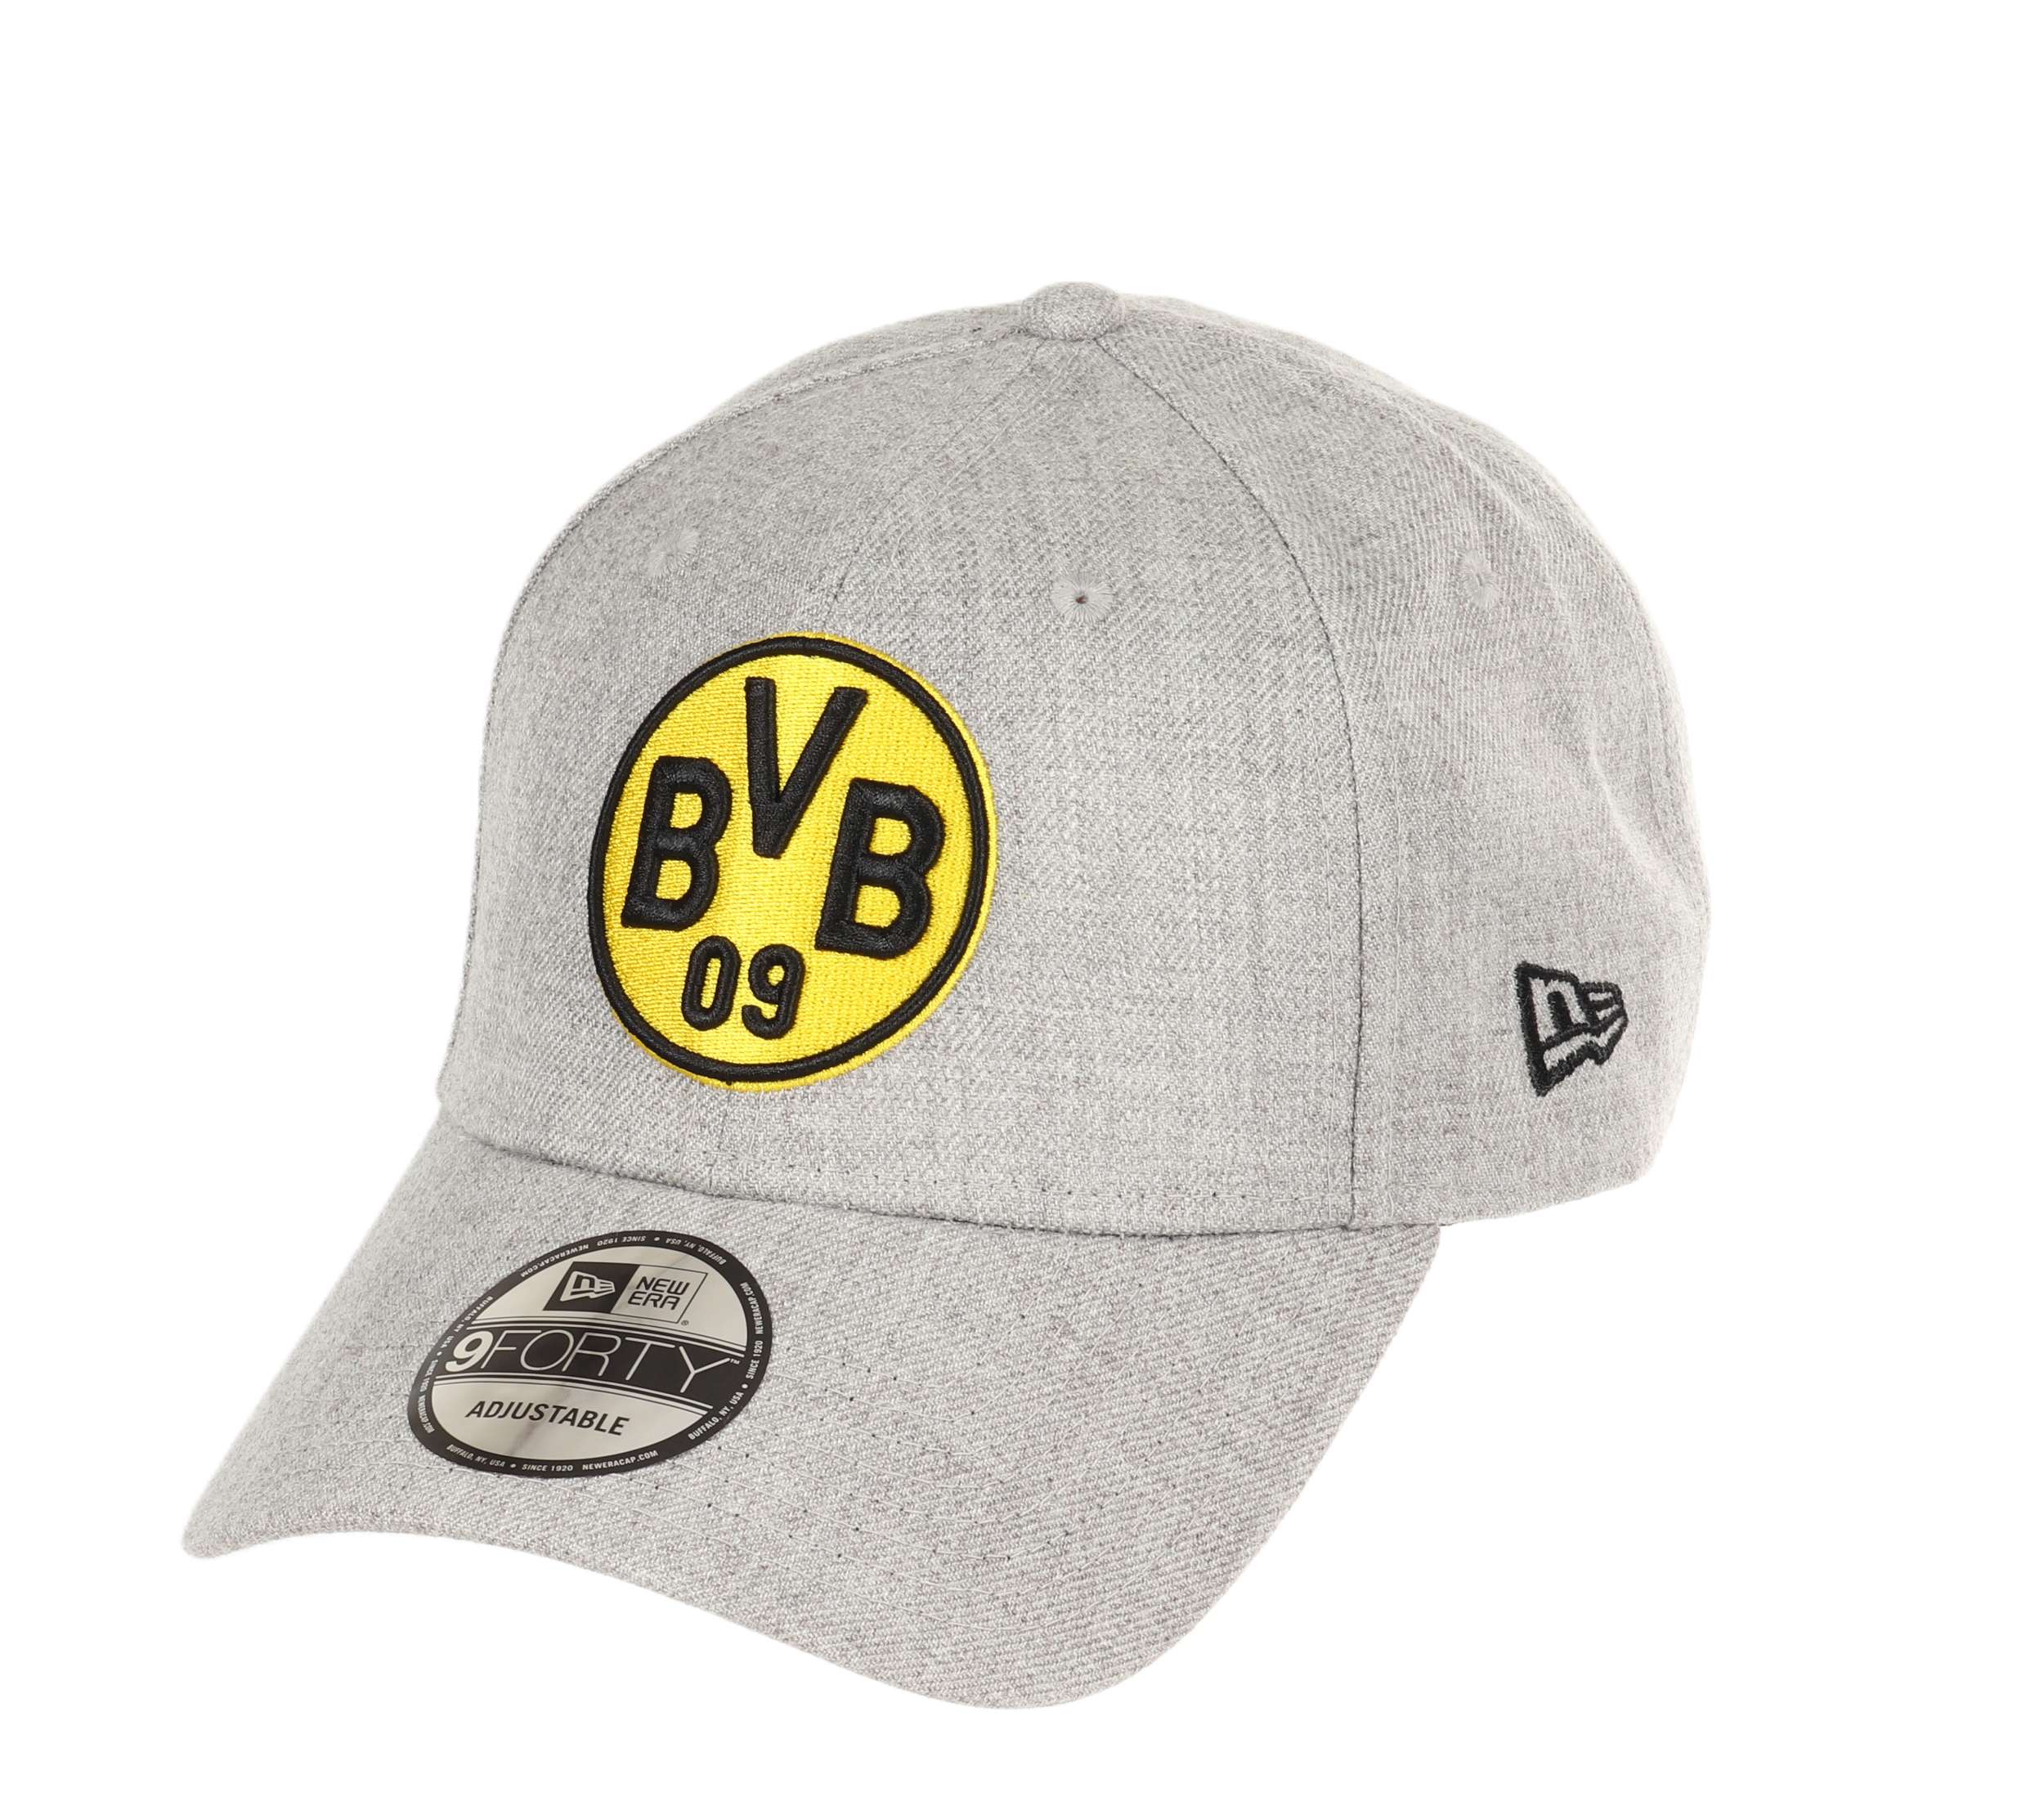 BVB 09 Borussia Dortmund Grey 9Forty Adjustable Cap New Era